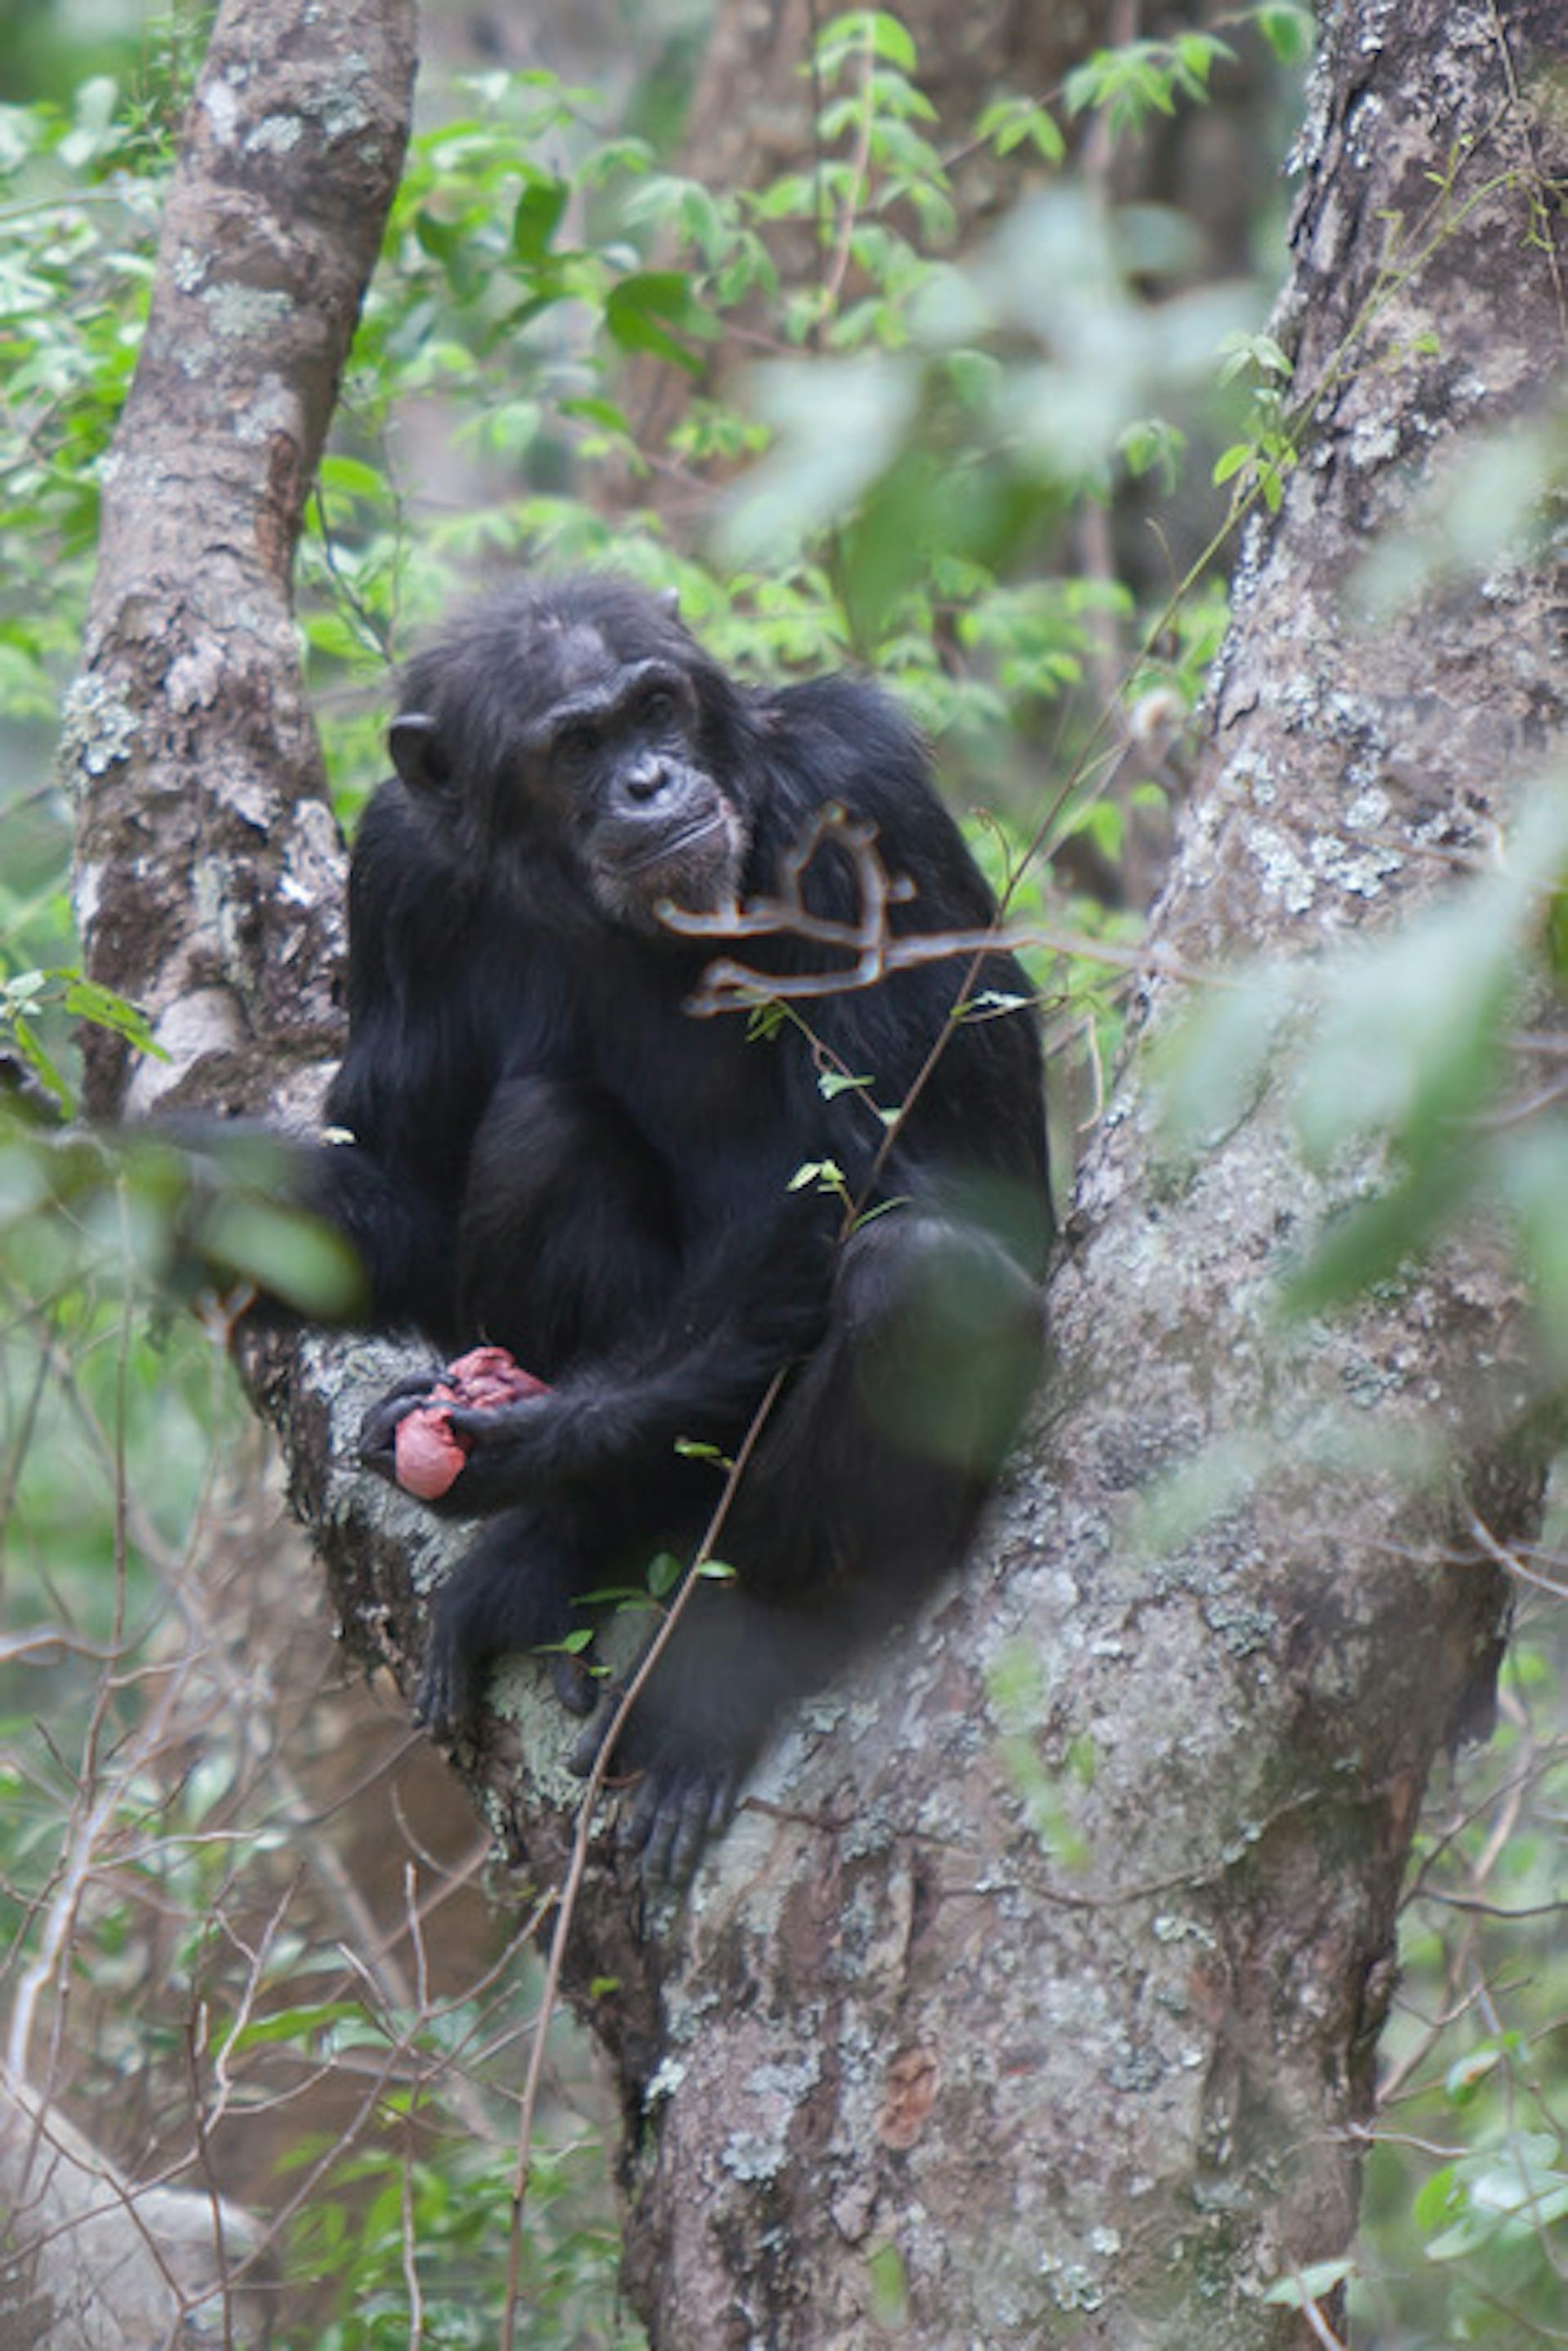 chimpanzee diet based on dentition